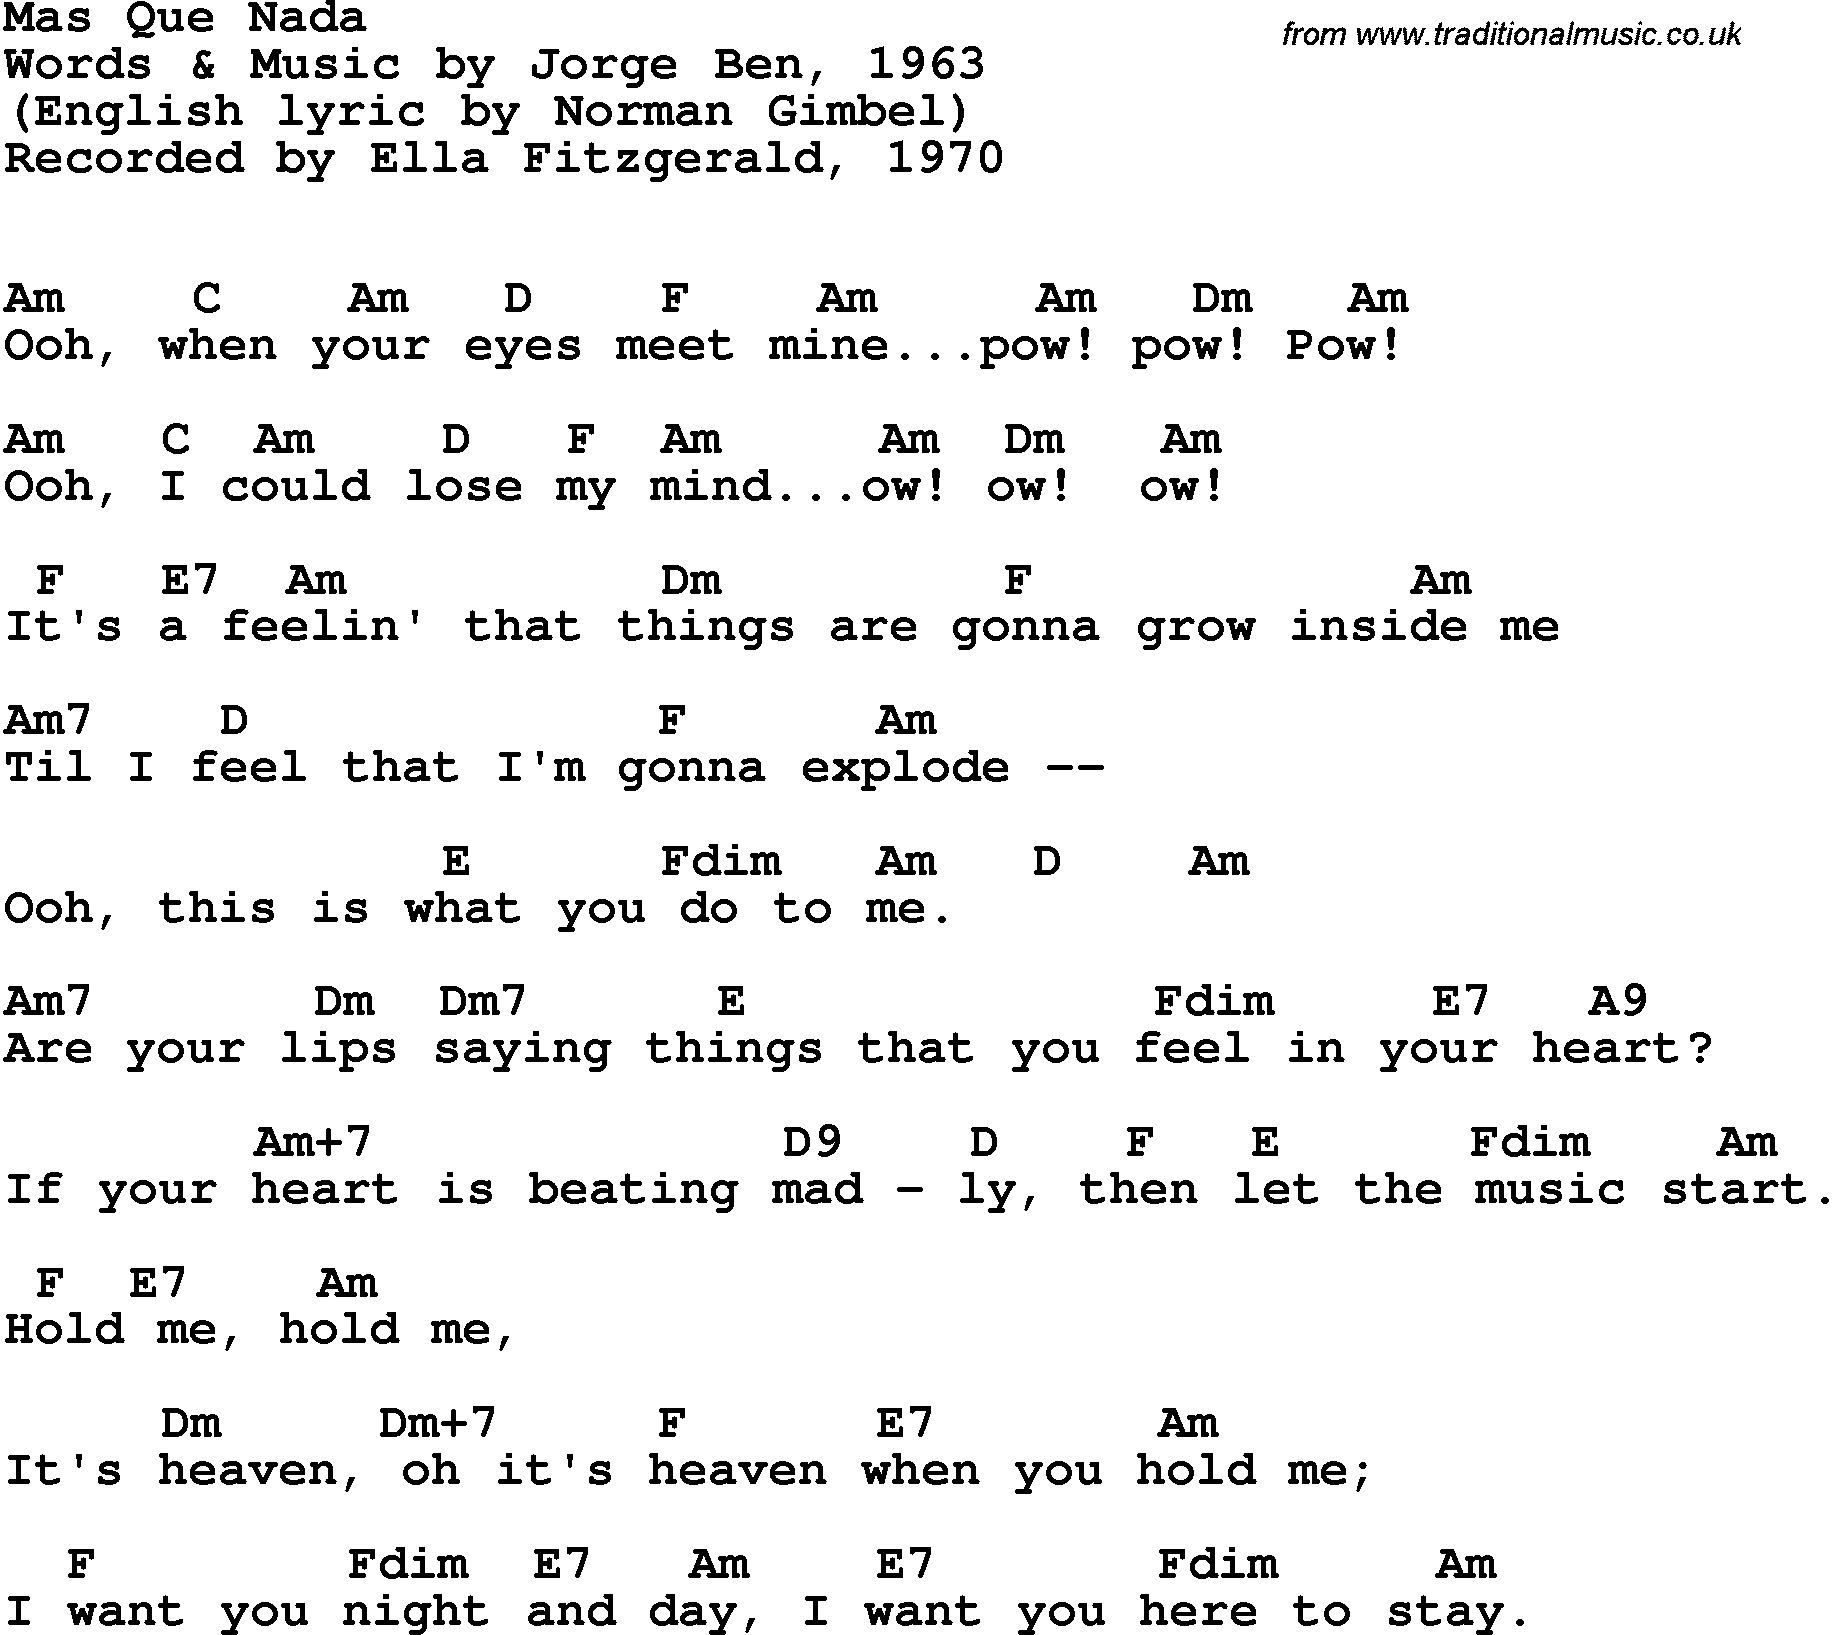 Song Lyrics with guitar chords for Mas Que Nada - Ella Fitzgerald, 1970